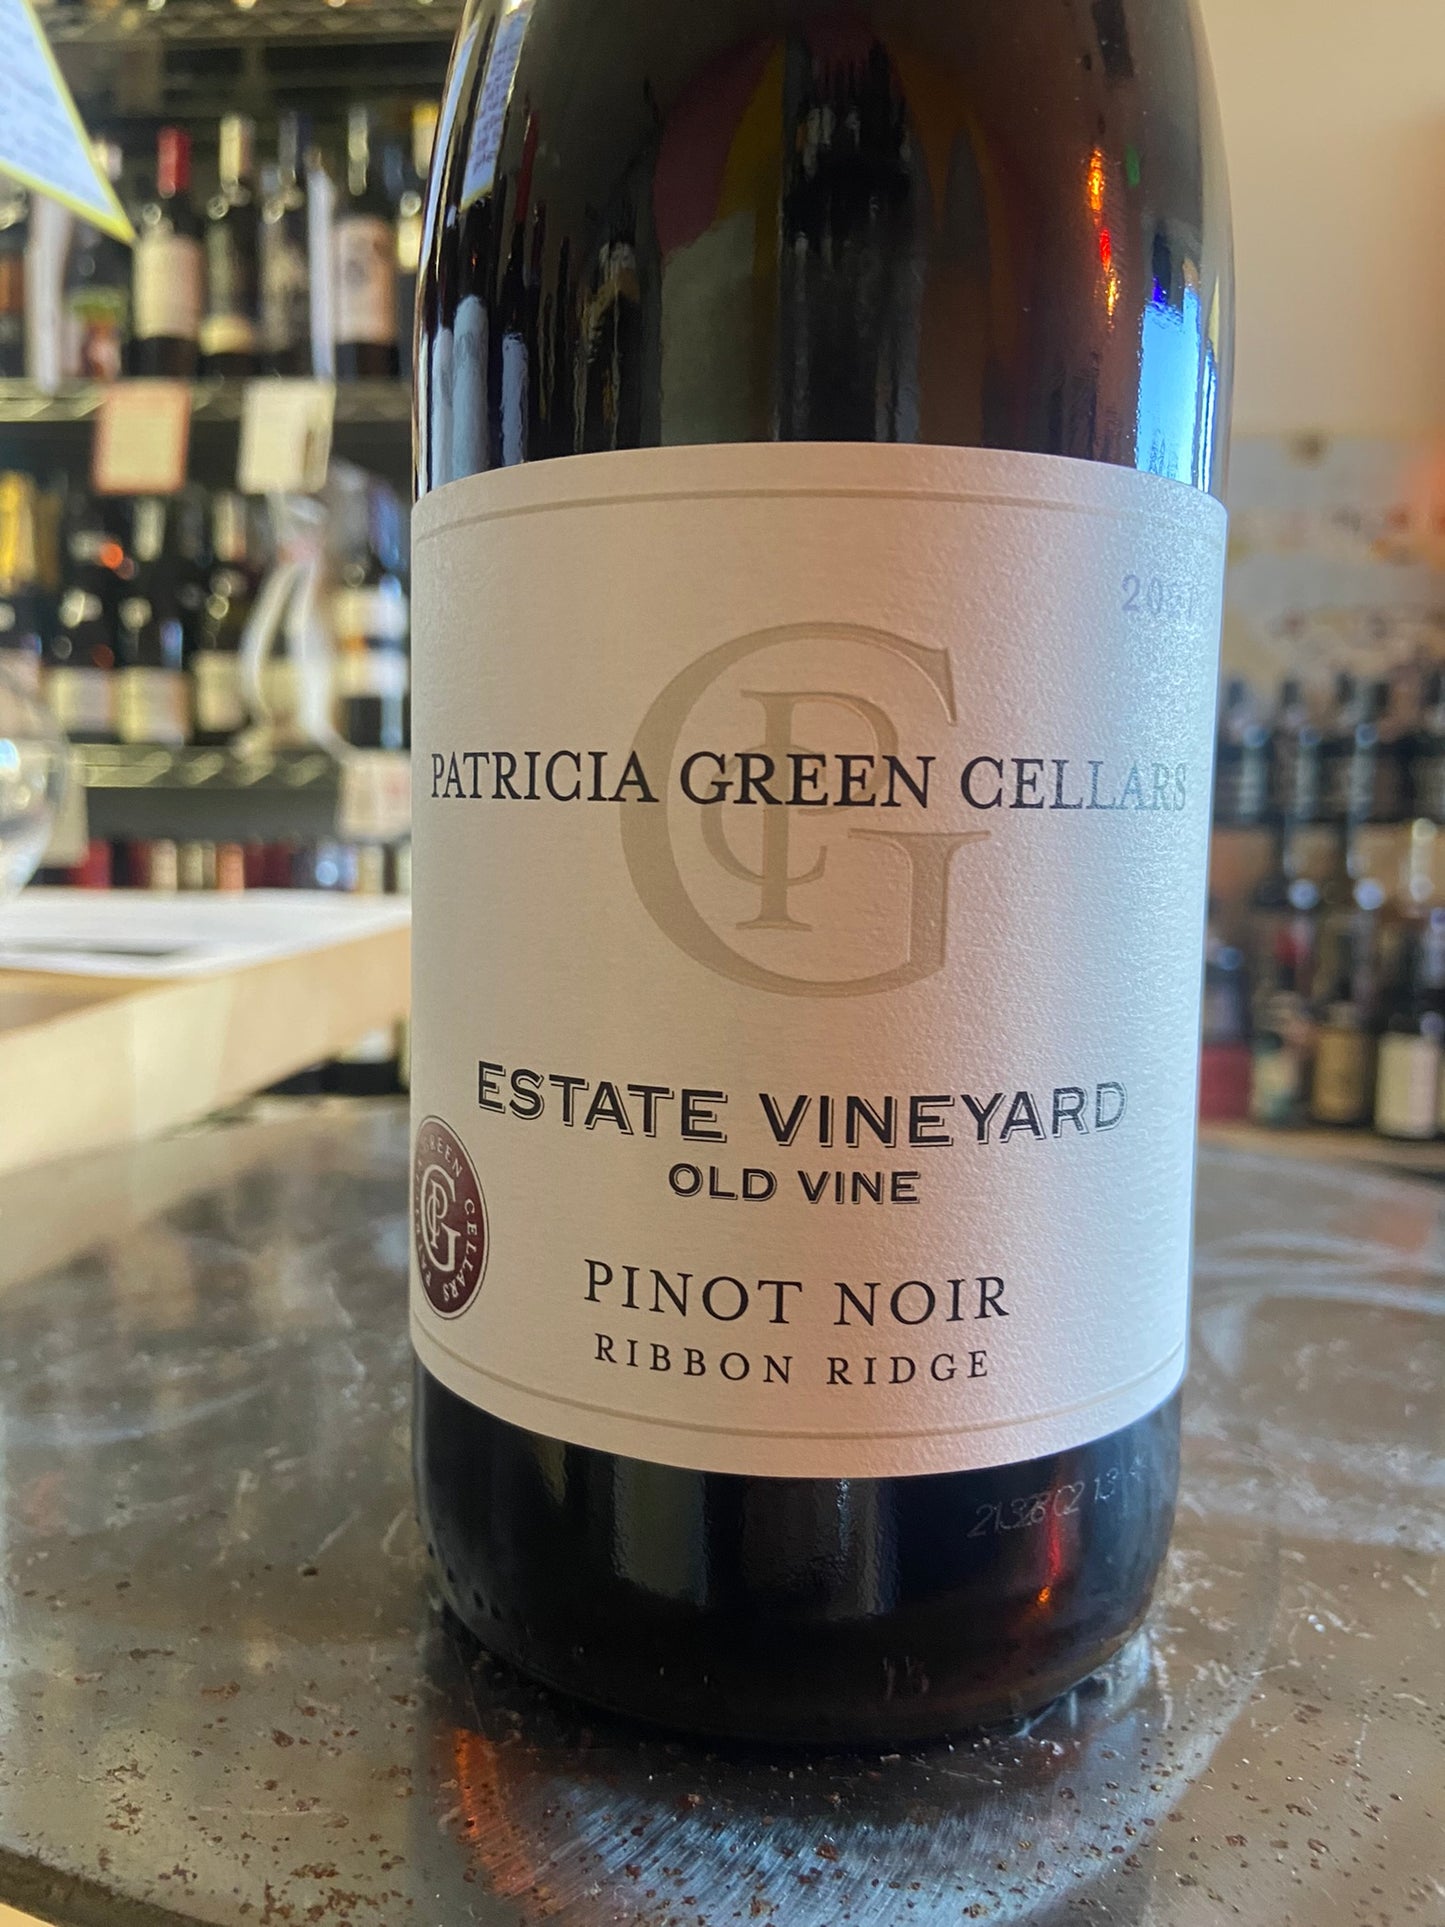 PATRICIA GREEN CELLARS 2021 Pinot Noir 'Estate Vineyard Old Vine' (Willamette Valley, OR)